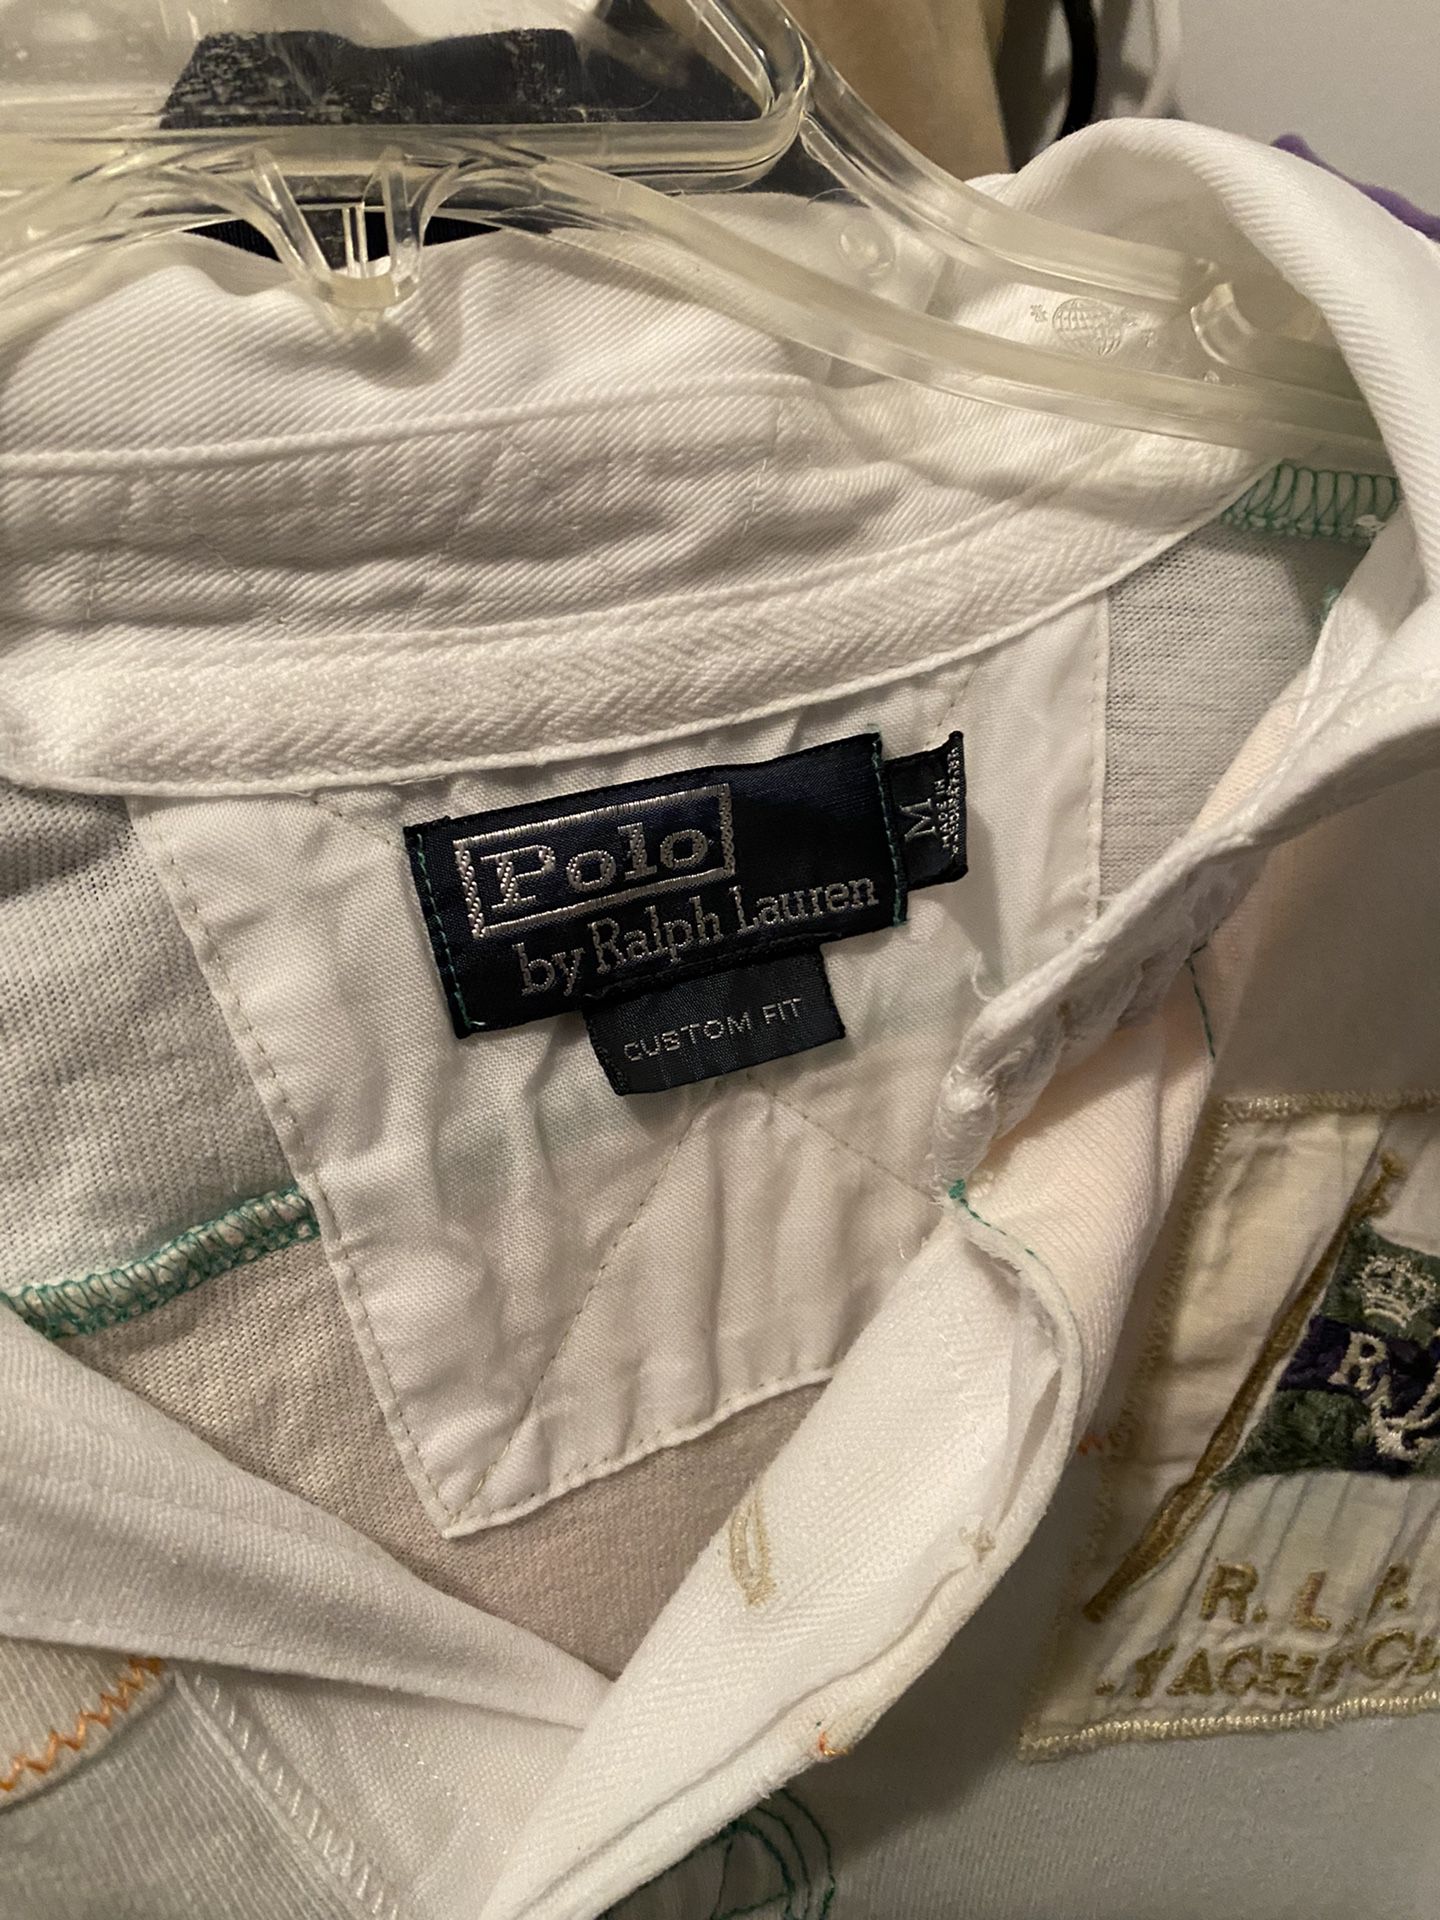 Ralph Lauren Polo Men’s Yacht Club Polo Shirt - Sz M Custom Fit